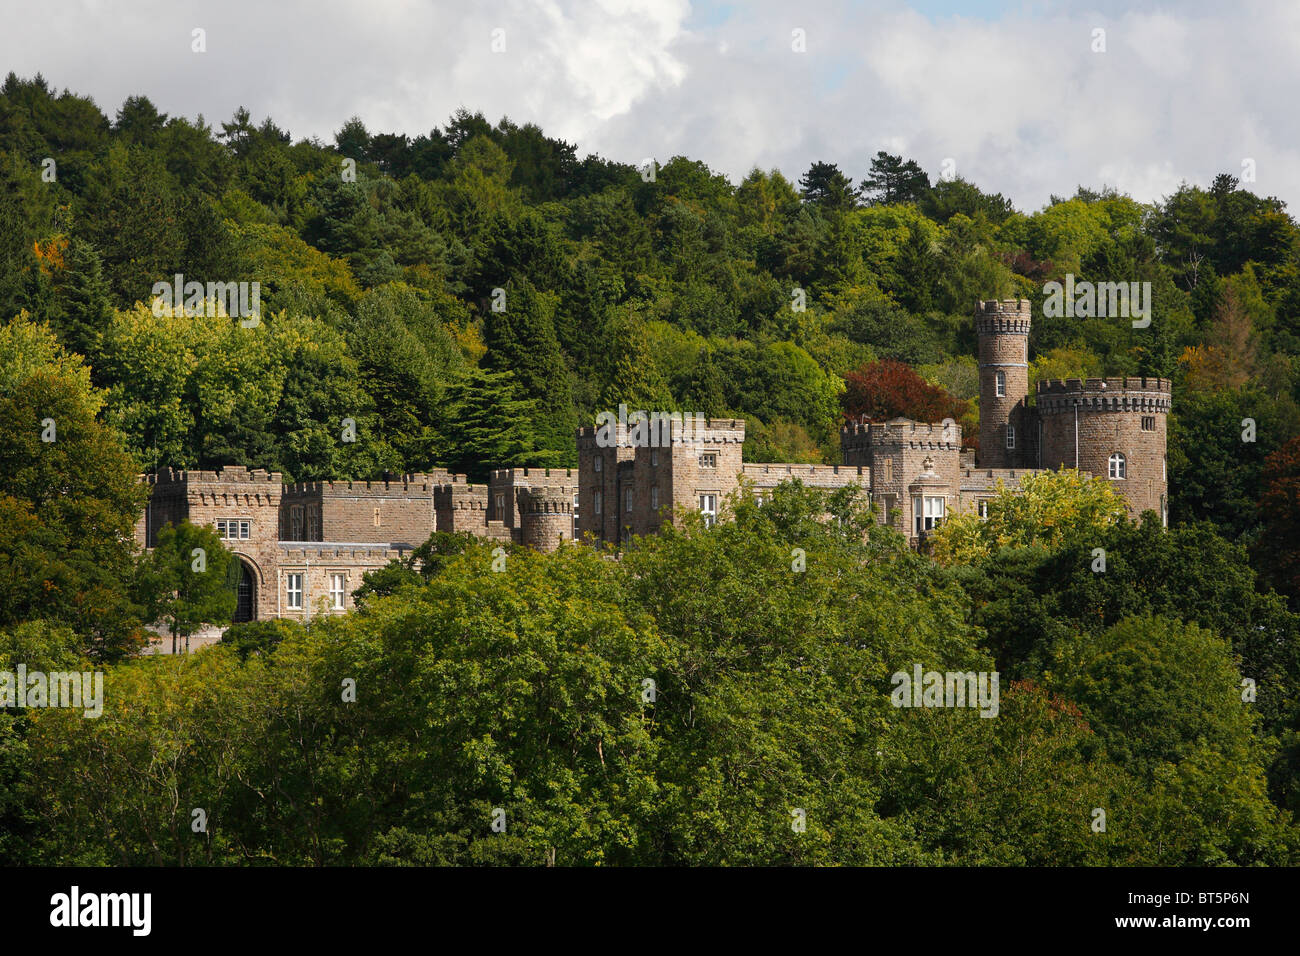 Cyfartha Burg, Merthyr Tydfil, Wales, UK Stockfoto